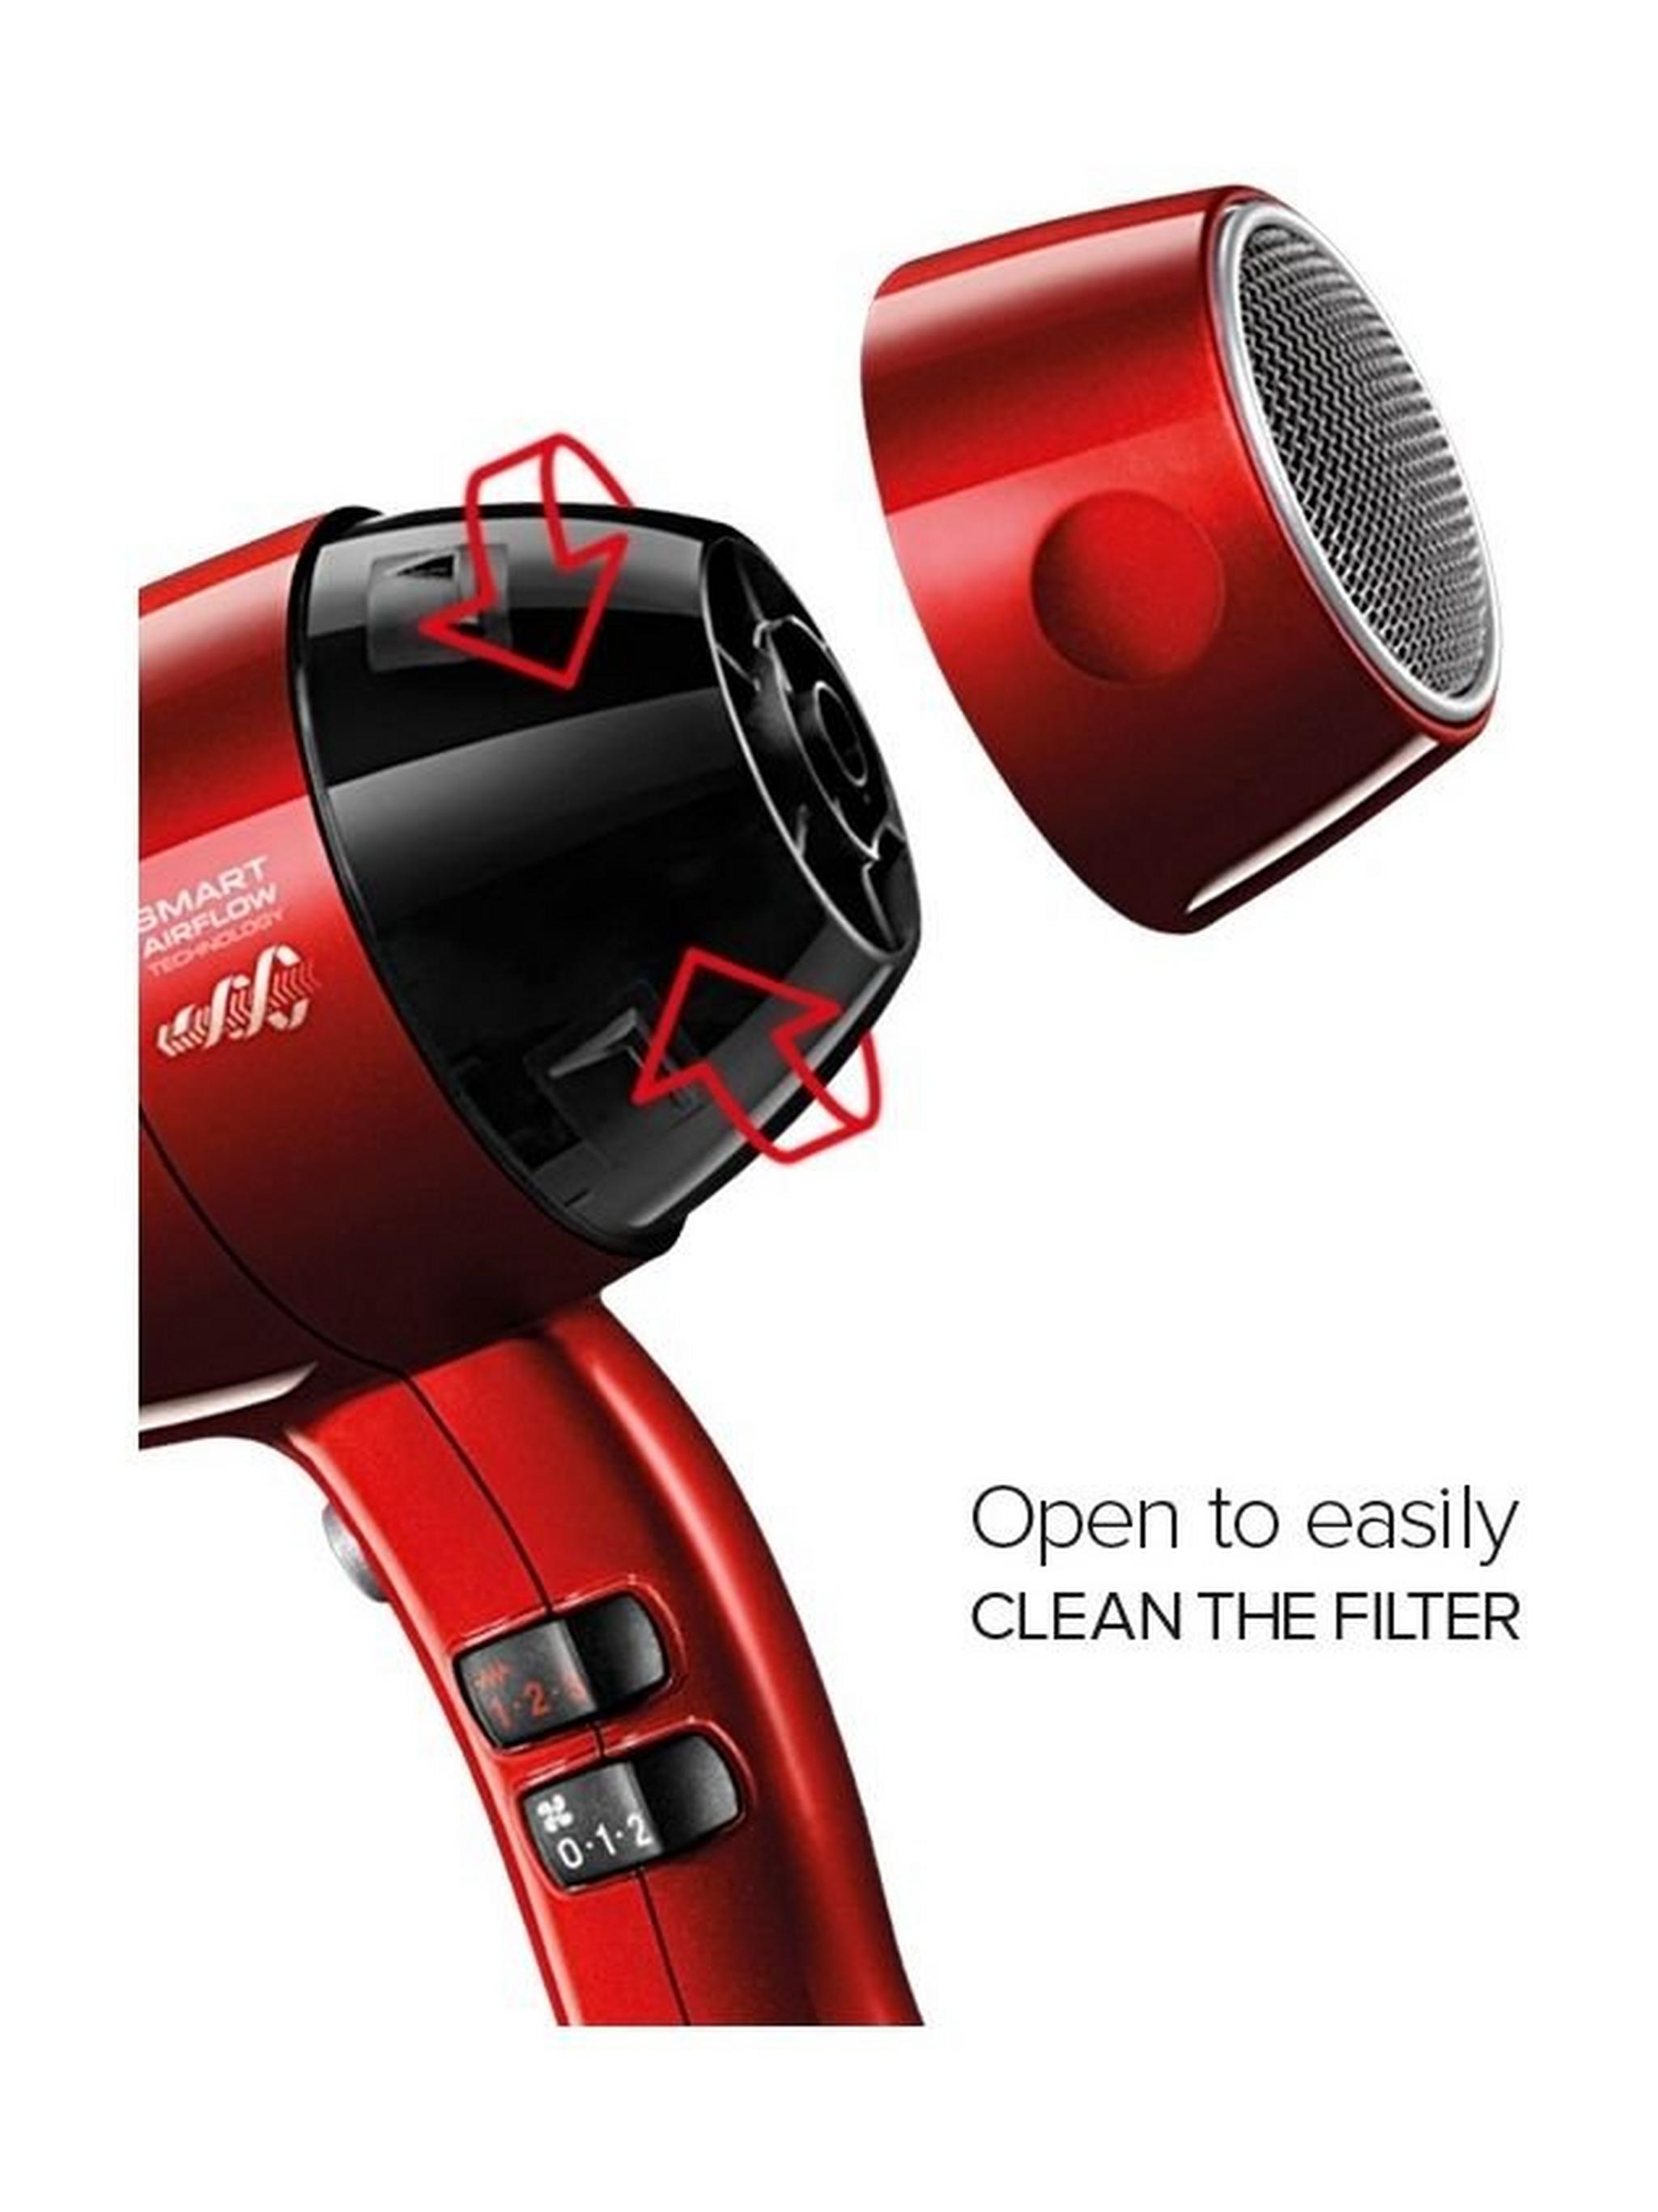 Valera Swiss Silent Jet 8500 Hair Dryer, 2000W W, 3 Heat Settings - Red